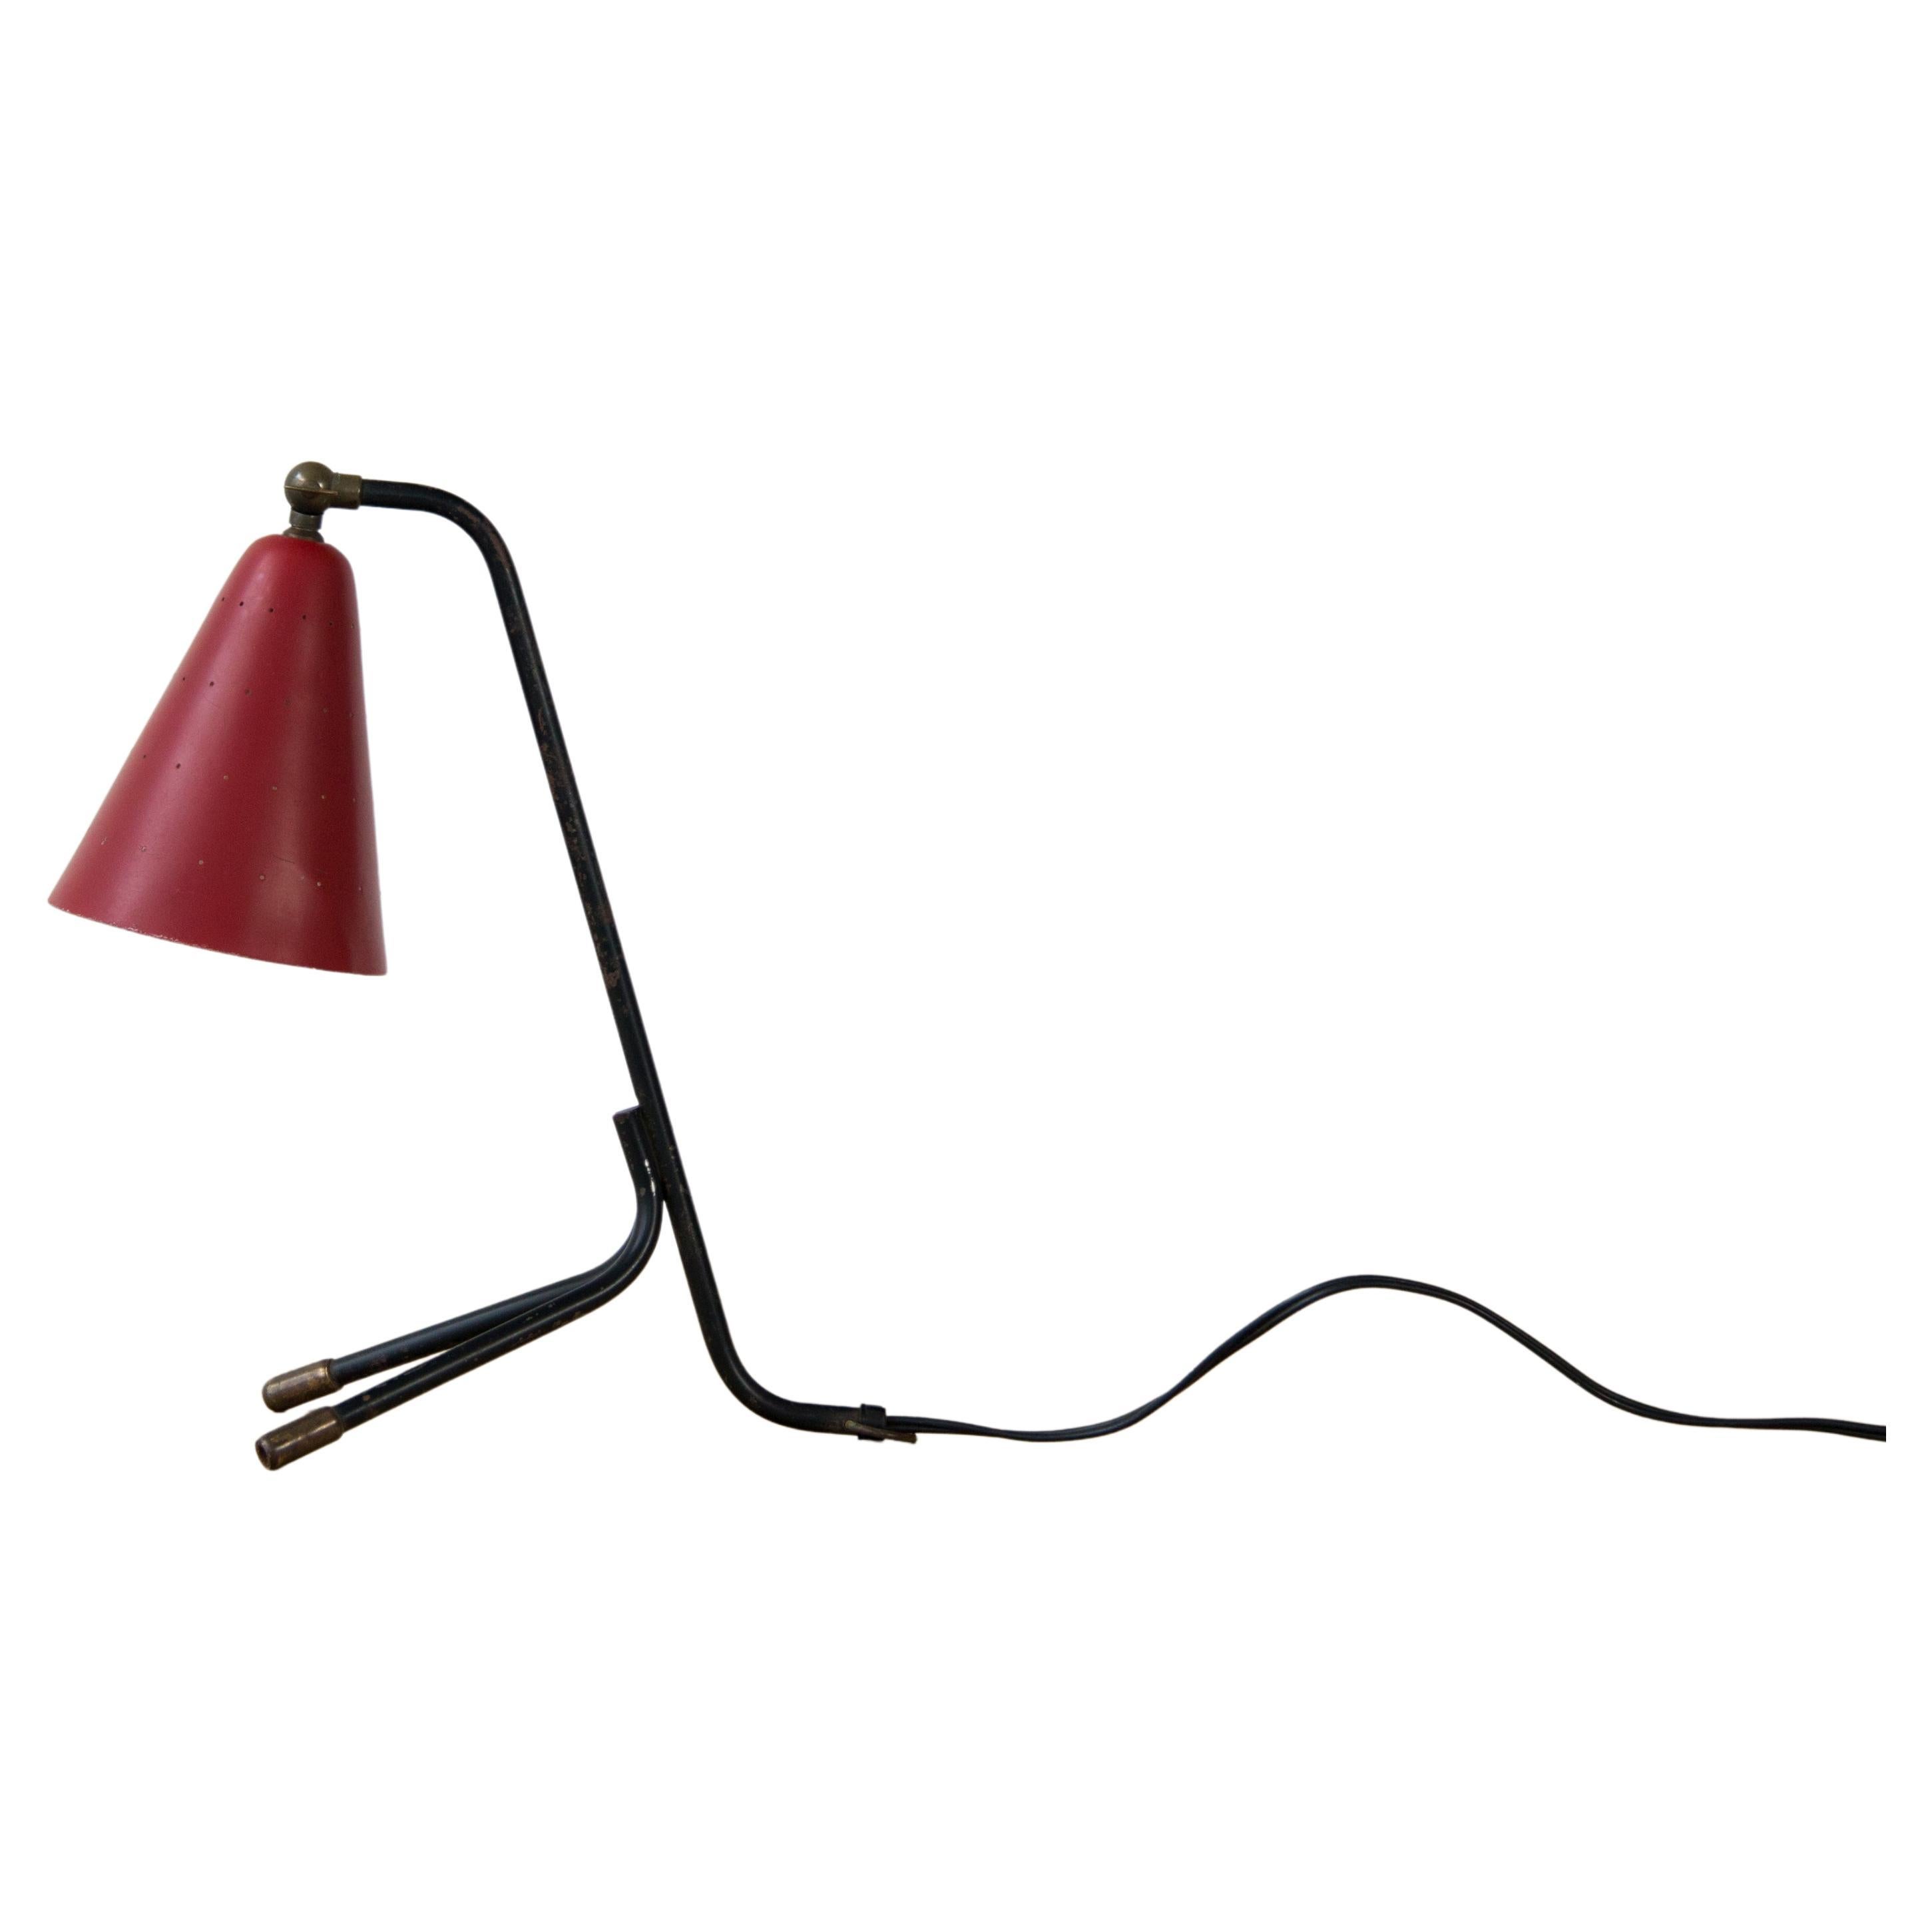 Adjustable Table Lamp by Svend Aage Holm Sorensen for Holm Sorensen & Co For Sale